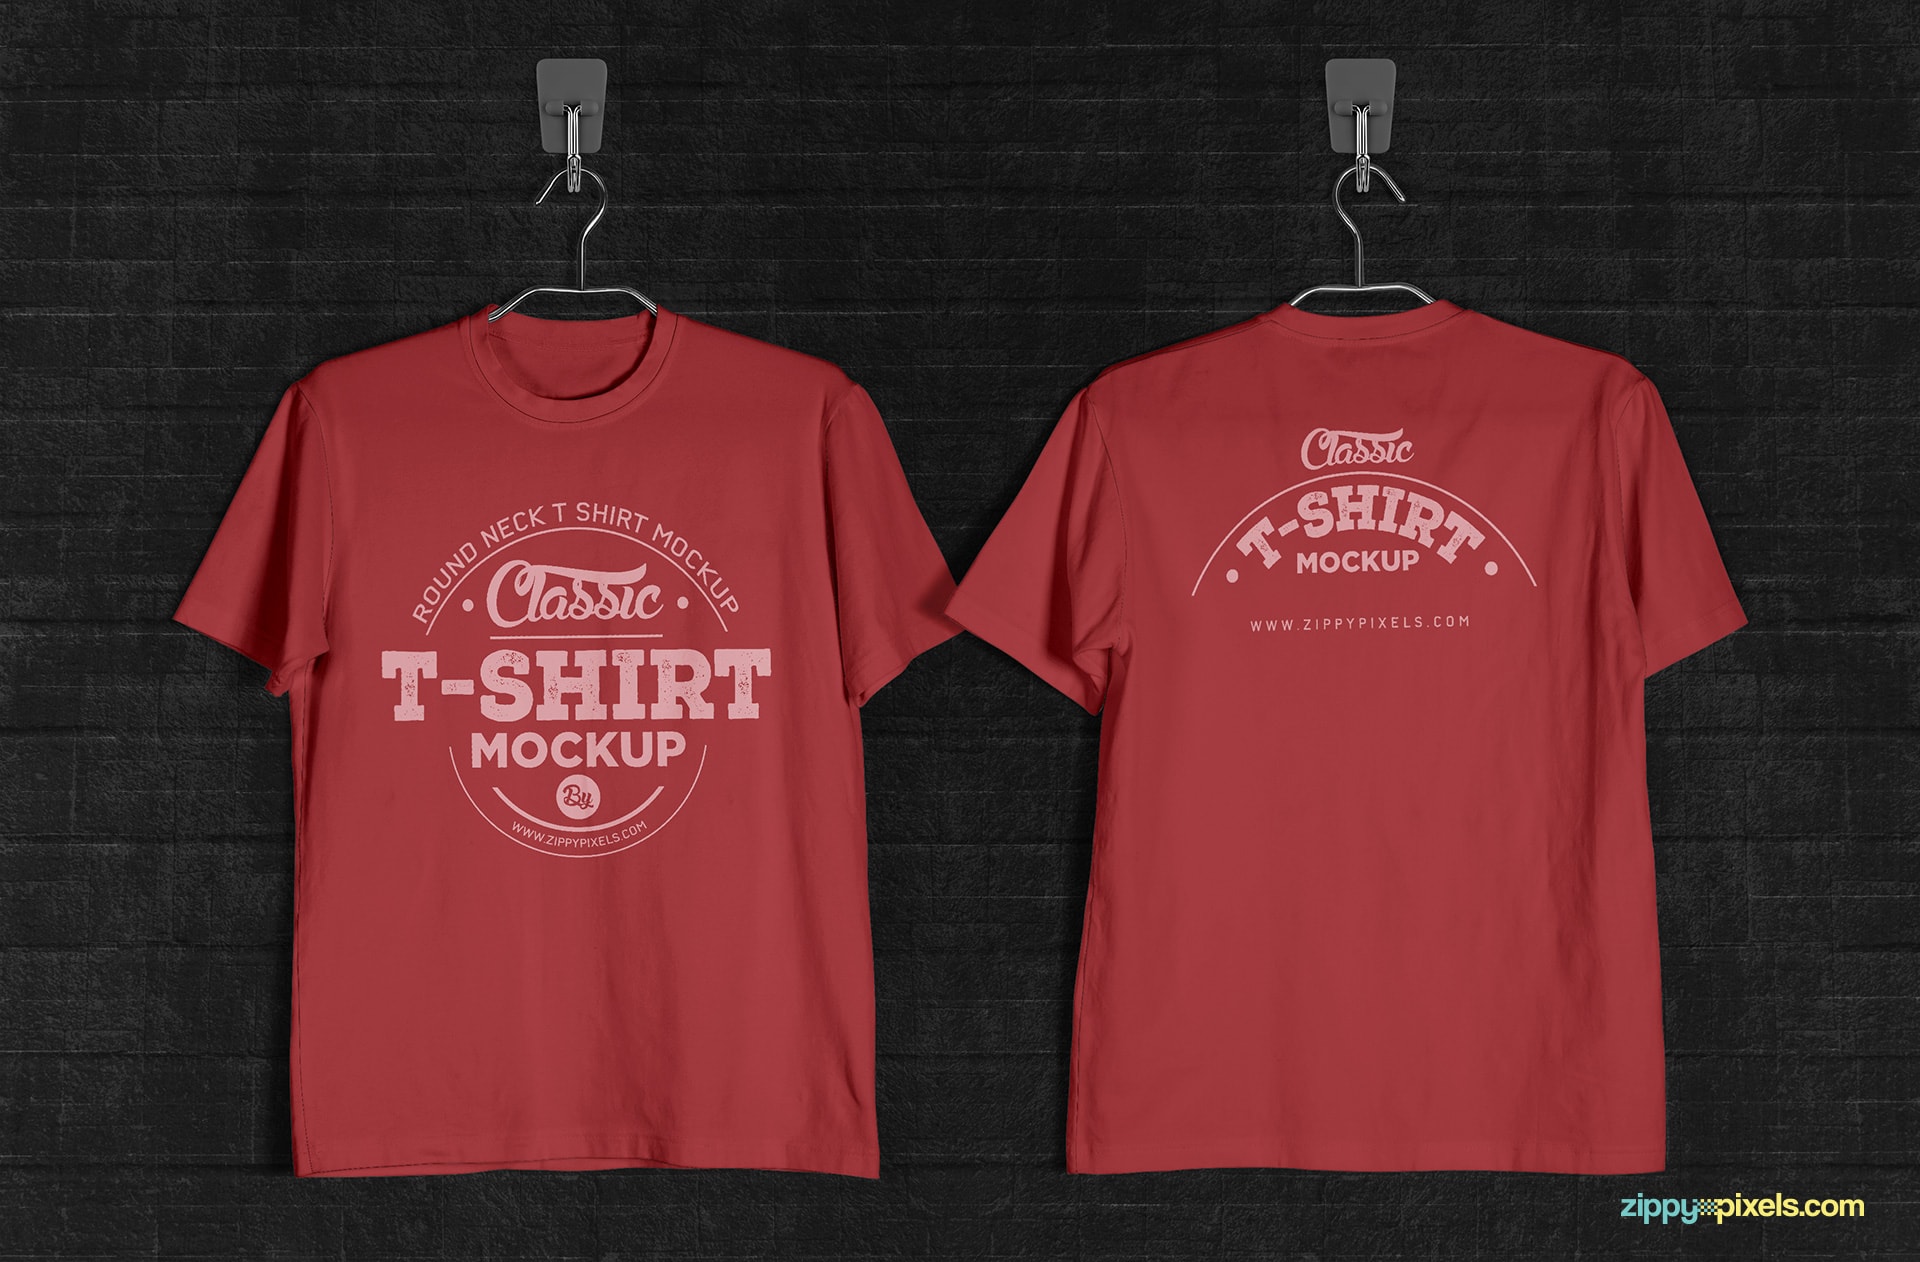 T-Shirt Mockup | Free Psd Download | Zippypixels